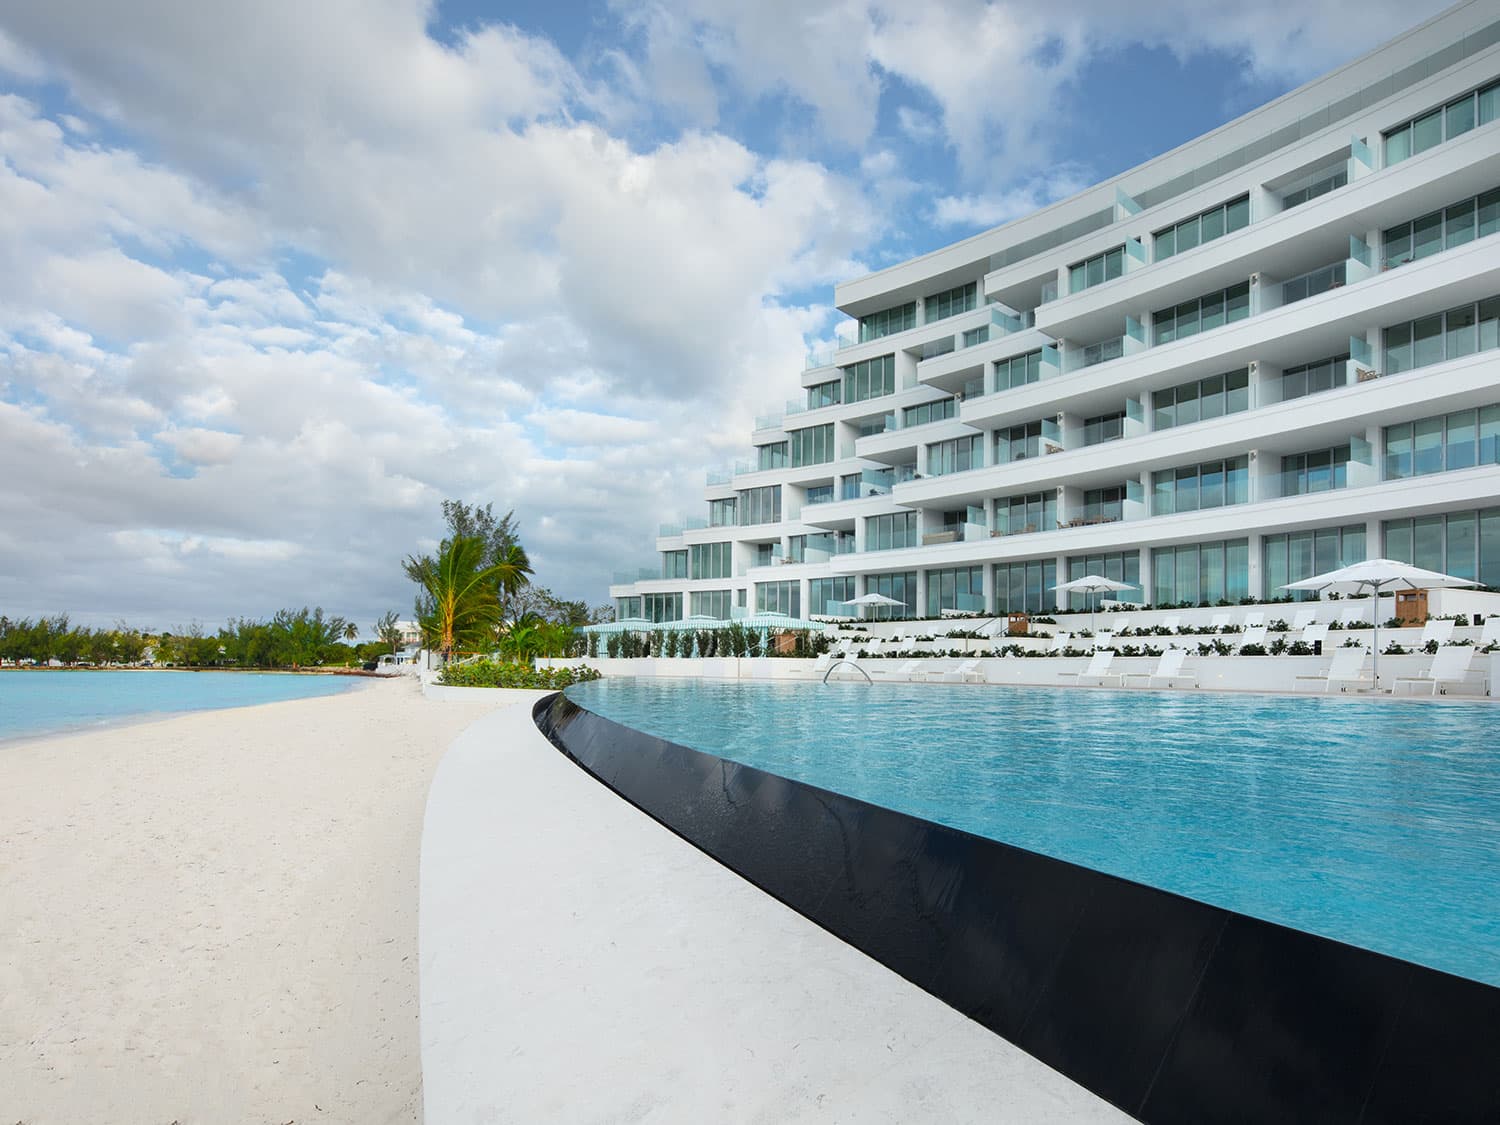 The pool and beach at the Goldwynn Resort in Nassau, Bahamas.